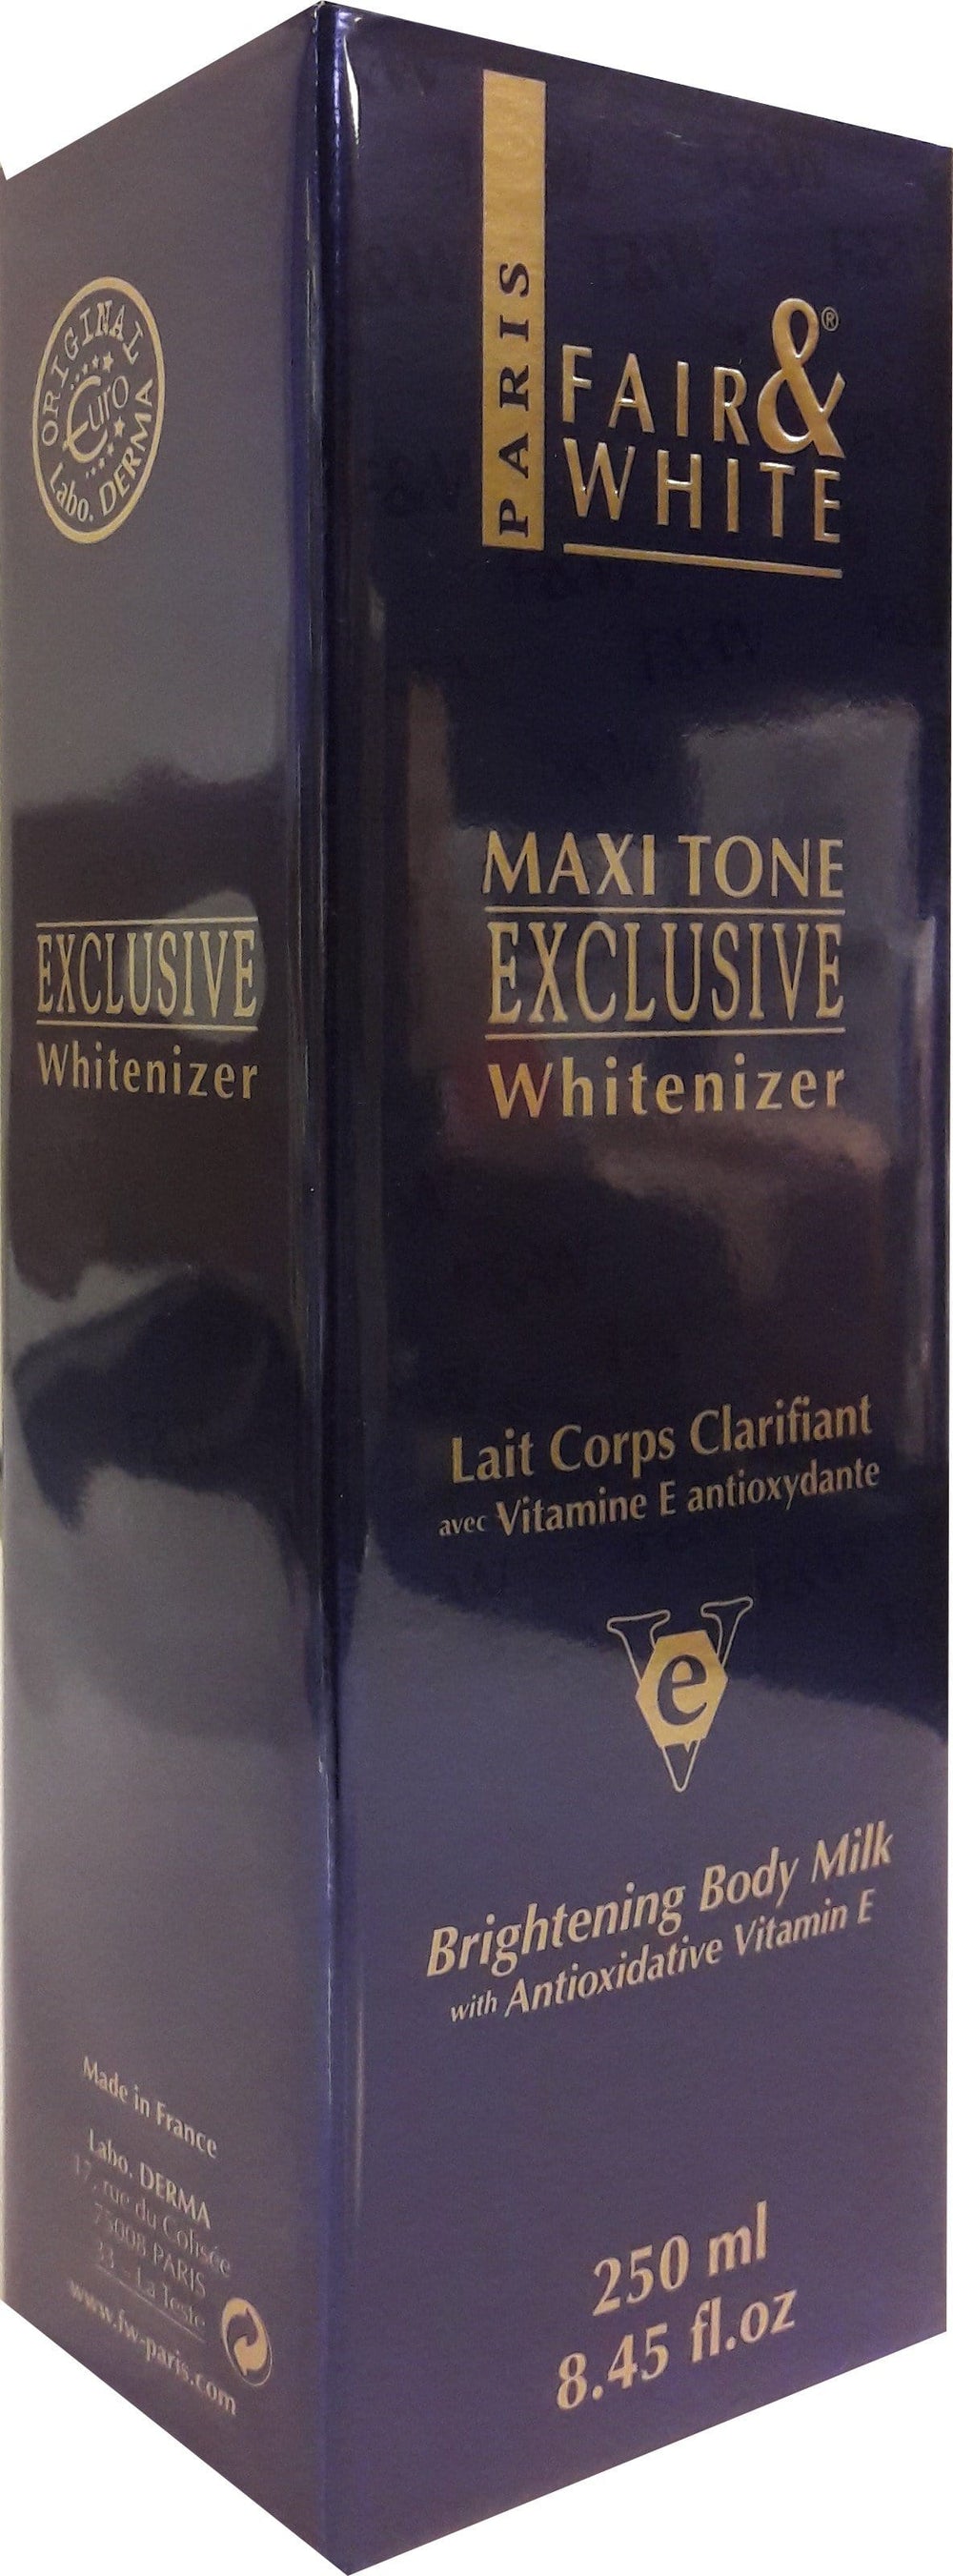 Fair and White Maxi Tone Exclusive Whitenizer Brightening Body Milk 250 ml